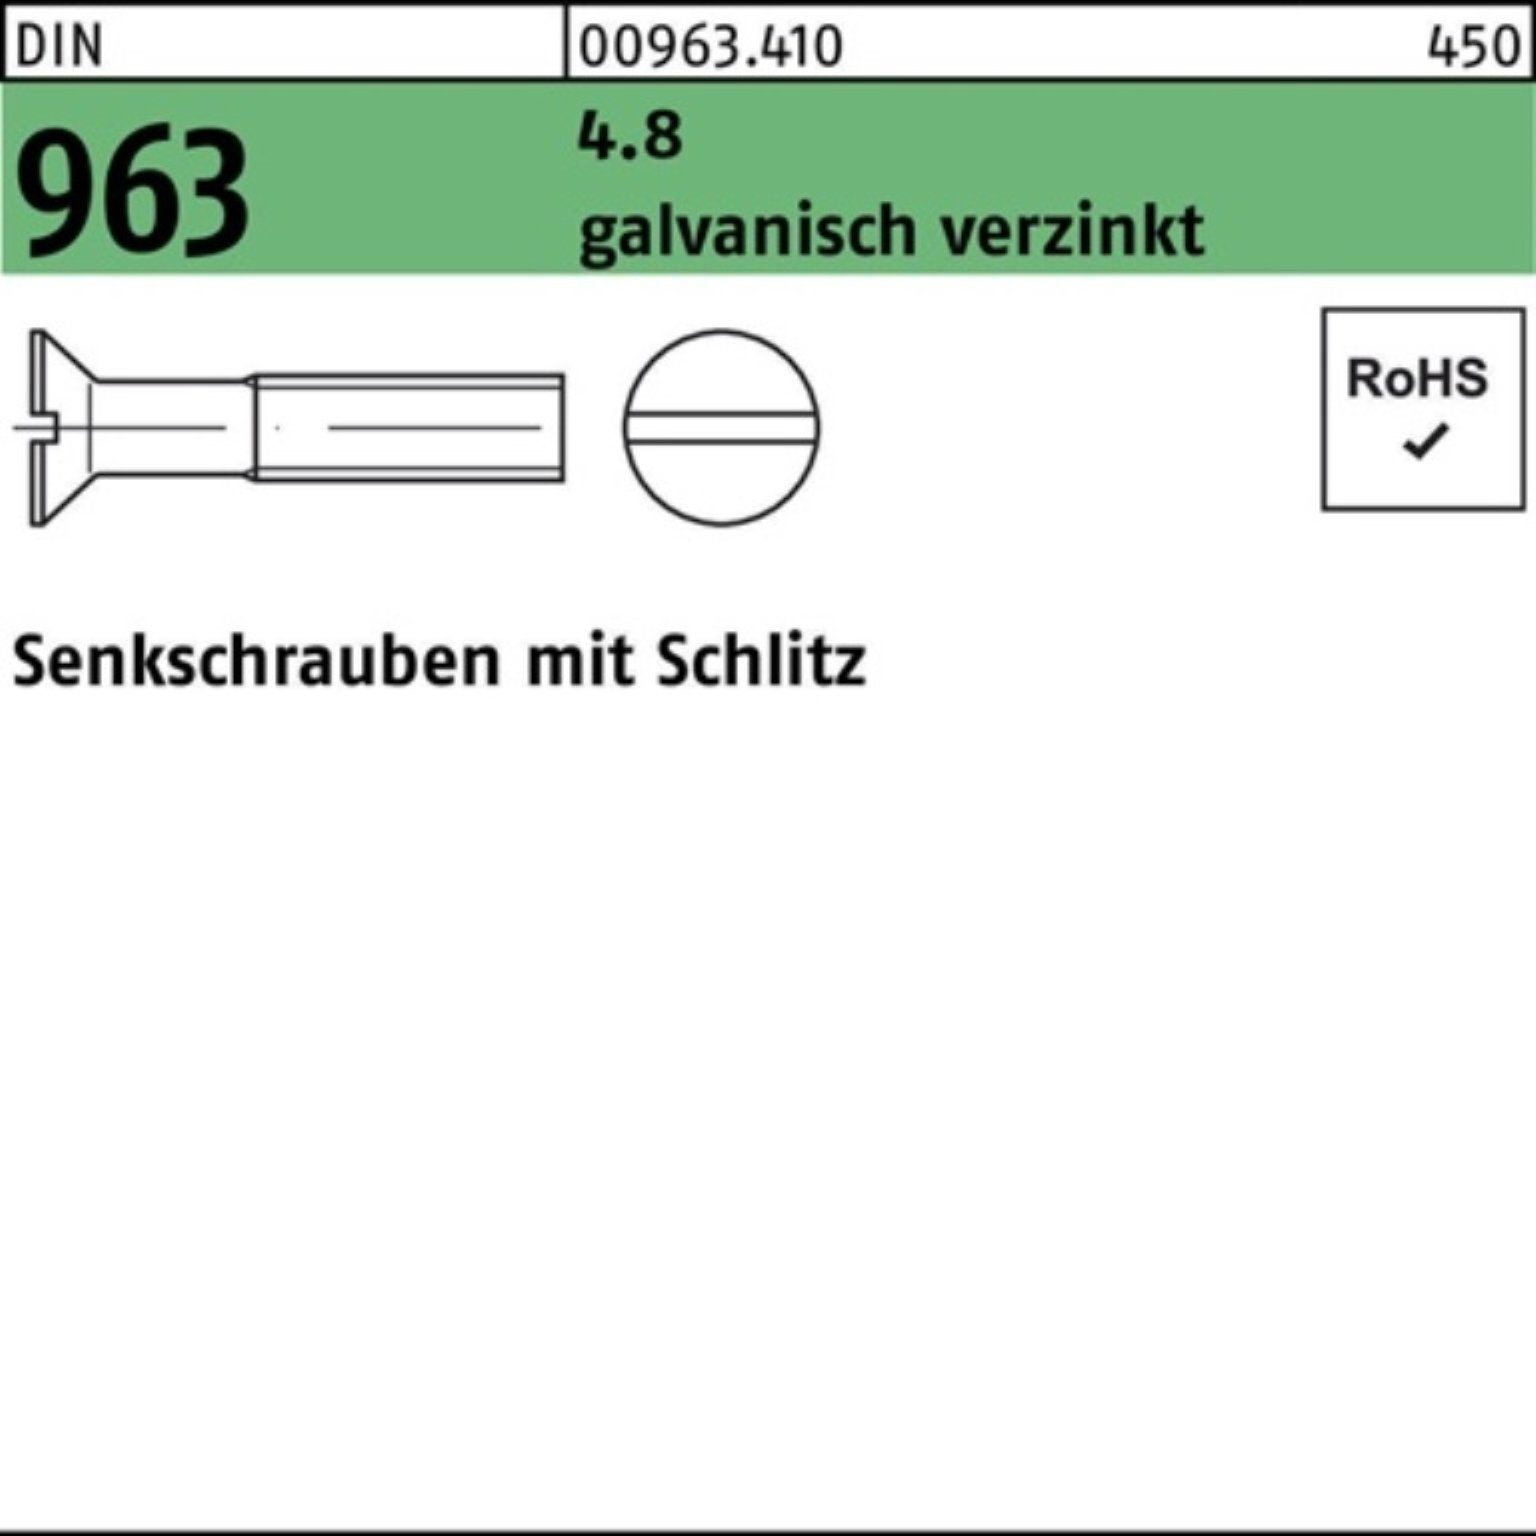 Reyher Senkschraube 200er Pack Stü 200 18 4.8 galv.verz. M4x Senkschraube DIN Schlitz 963